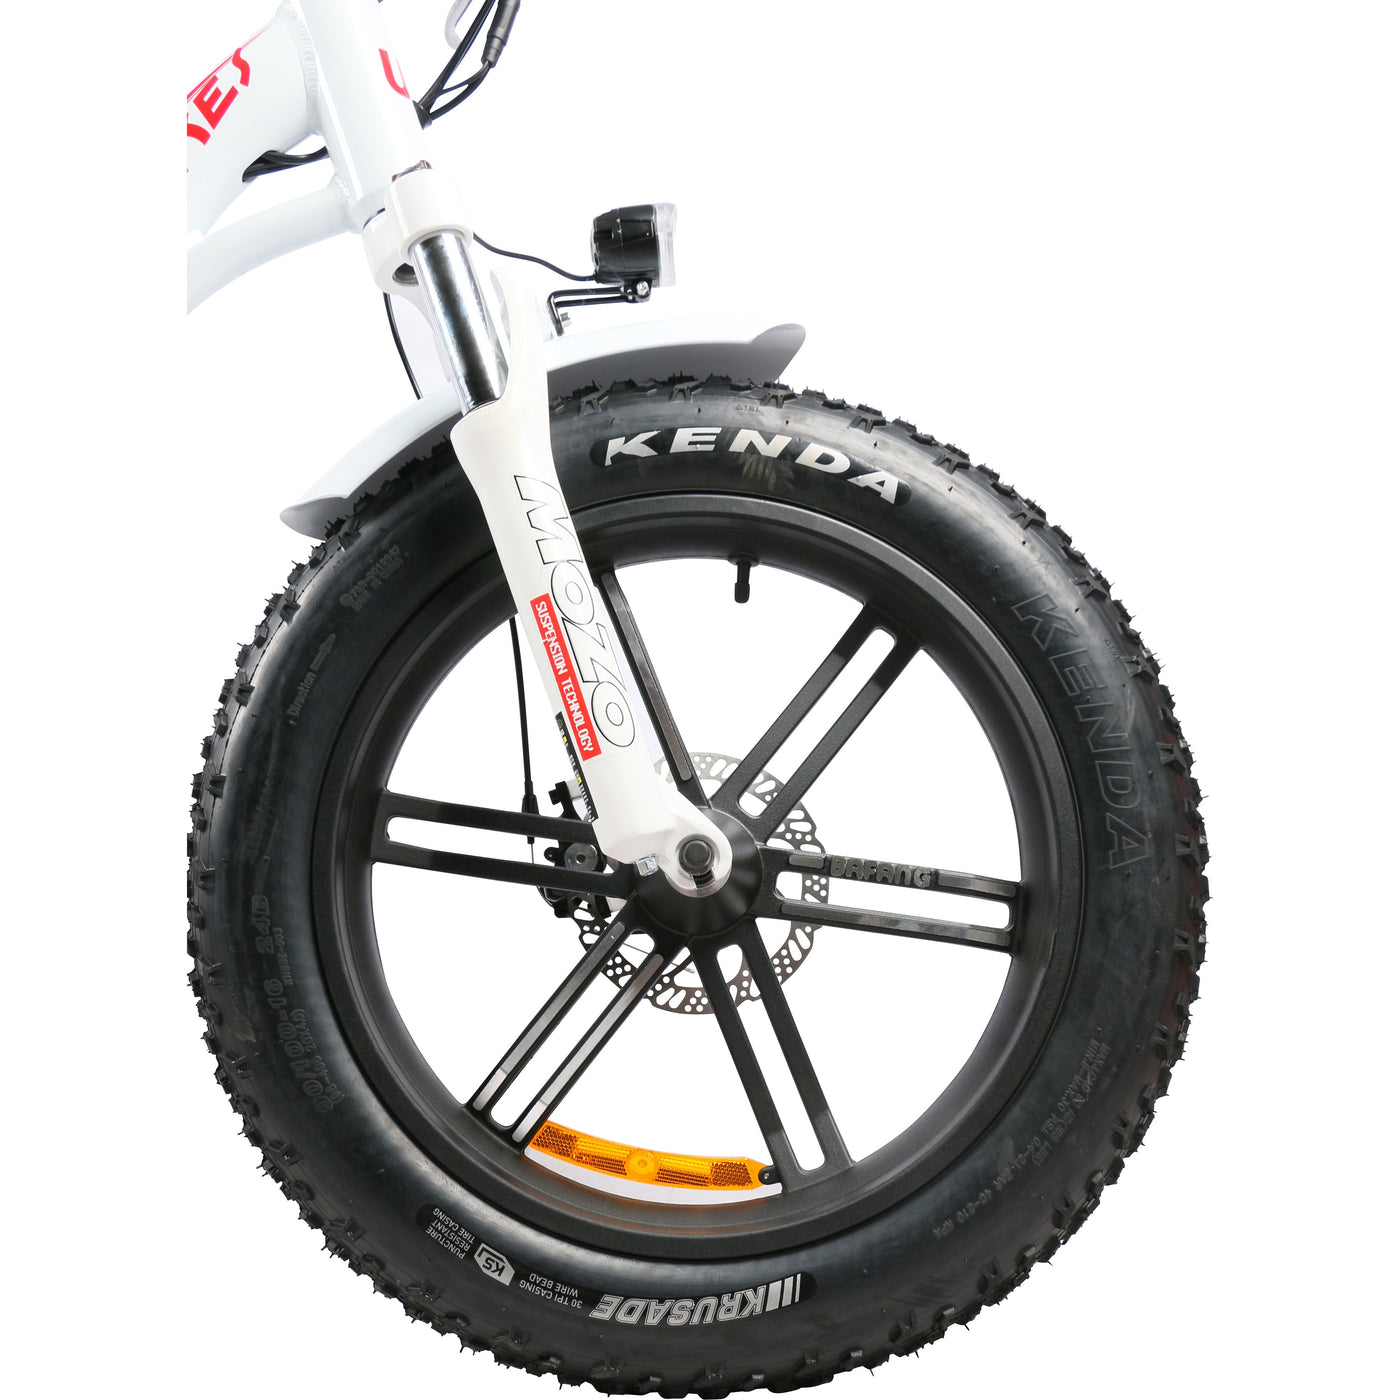 DJ Super Bike Step Thru with 20” fat tires, cast alloy wheels and adjustable fork